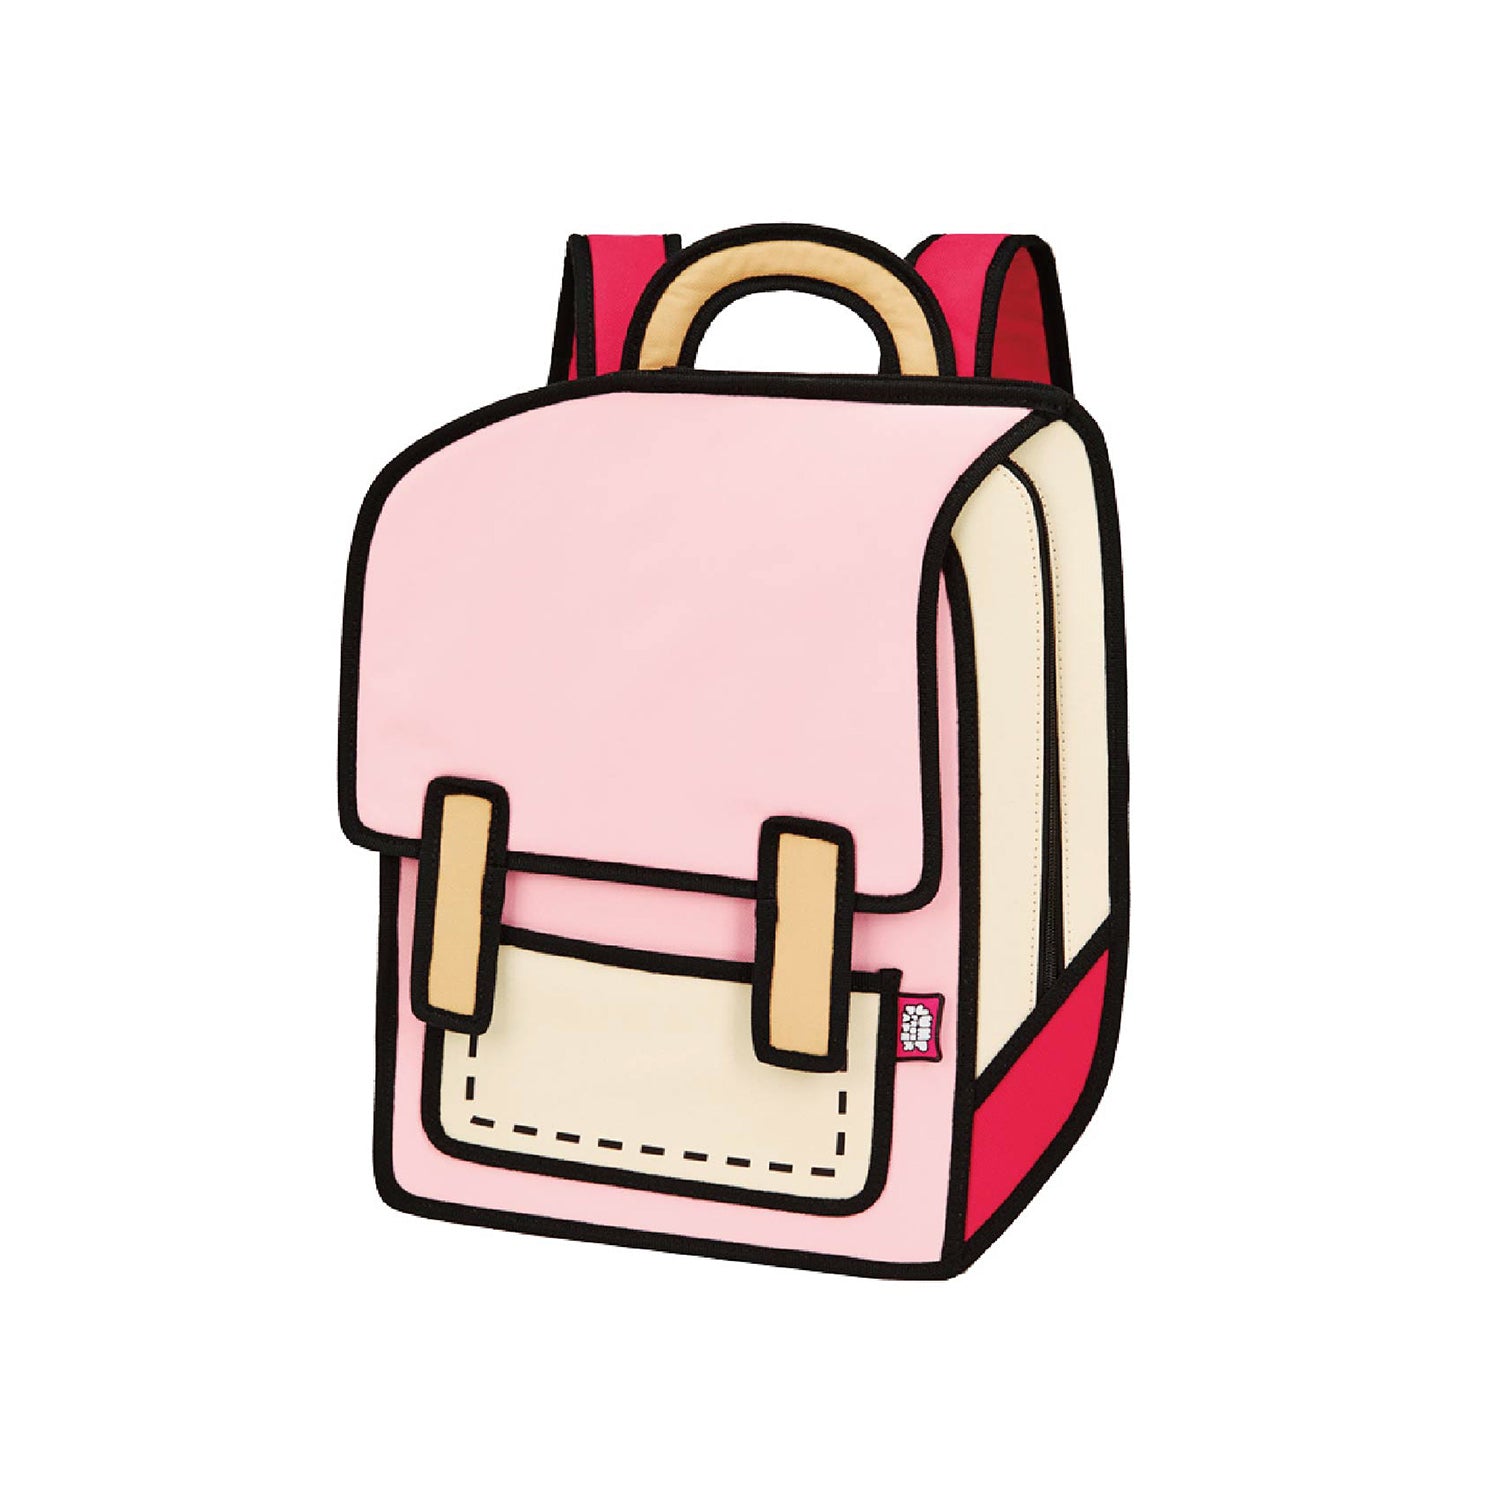 2d cartoon backpack